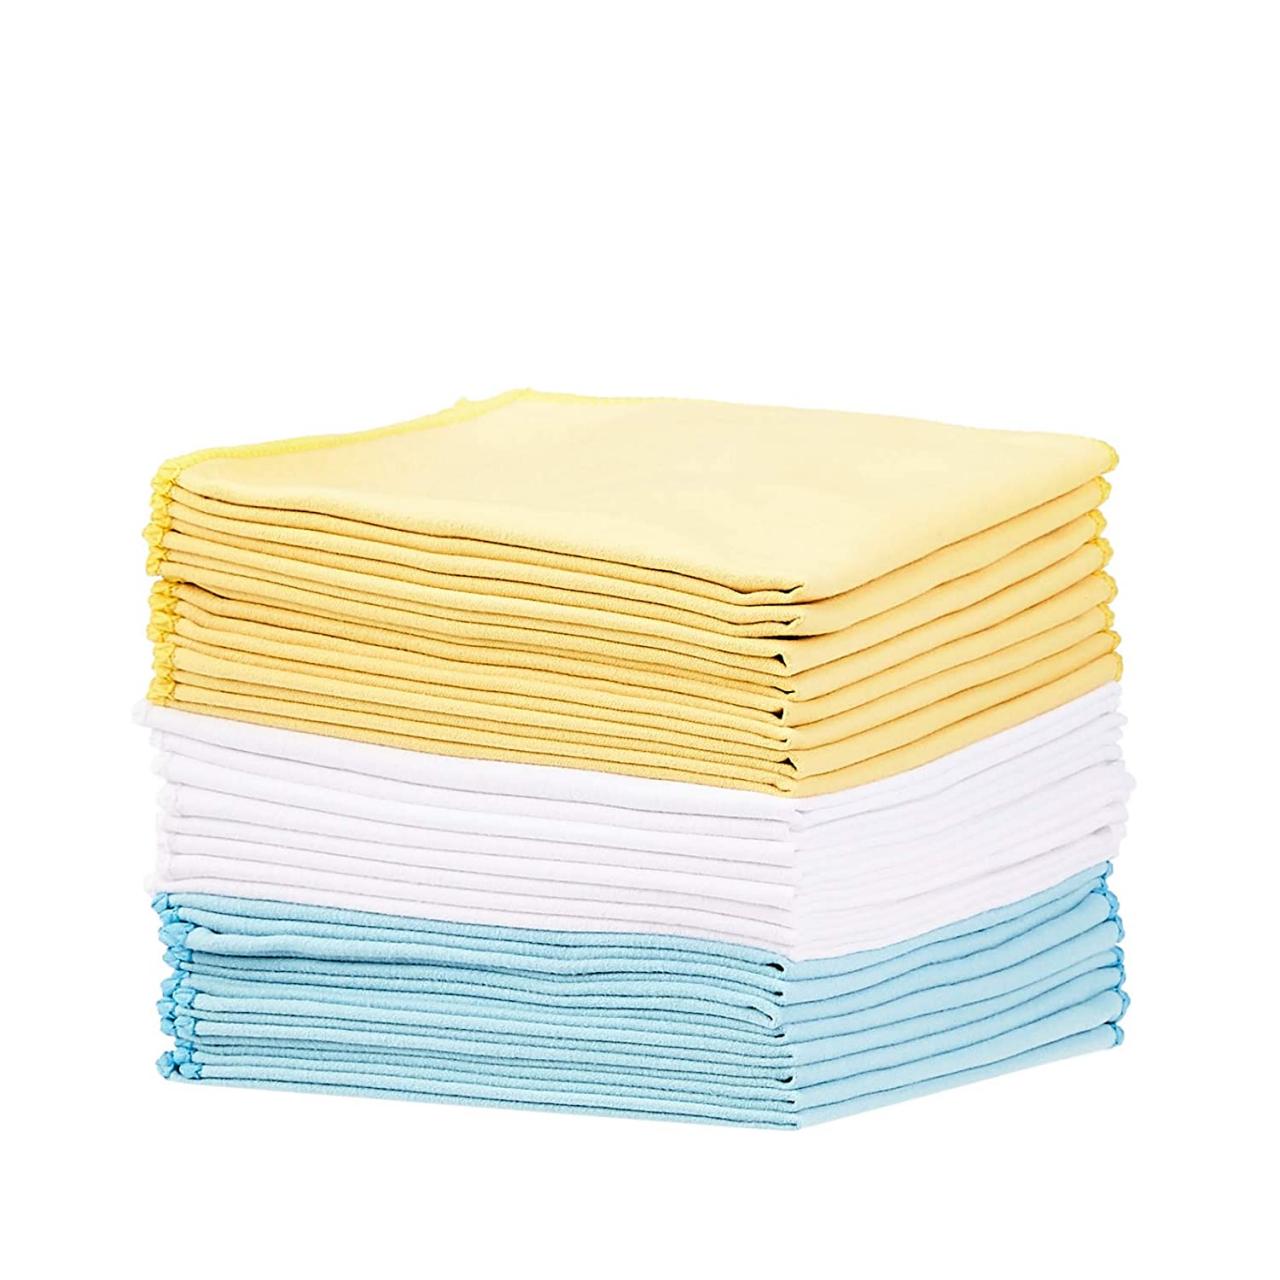 AmazonBasics Blue and Yellow Microfiber Cleaning Cloth, 24-Pack in 2020 | Clean  microfiber, Microfiber cleaning cloths, Microfiber